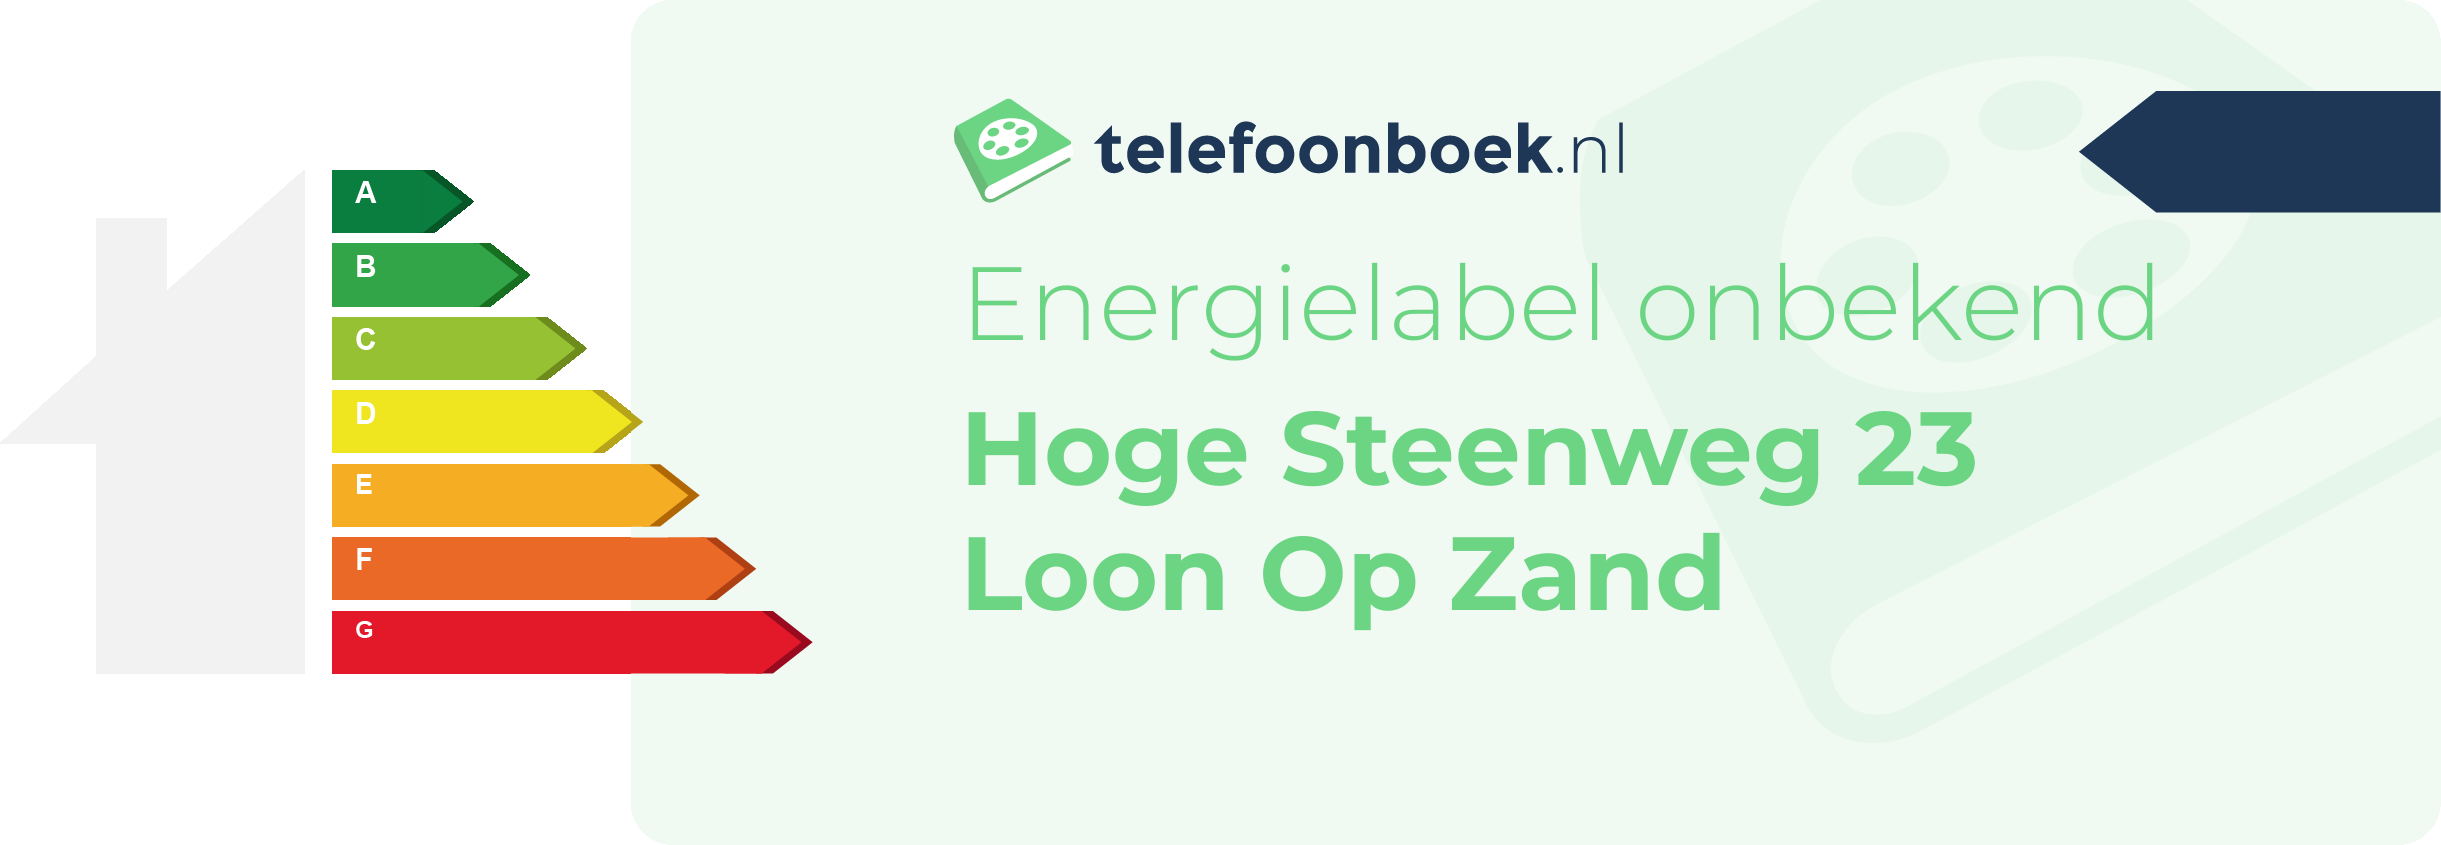 Energielabel Hoge Steenweg 23 Loon Op Zand